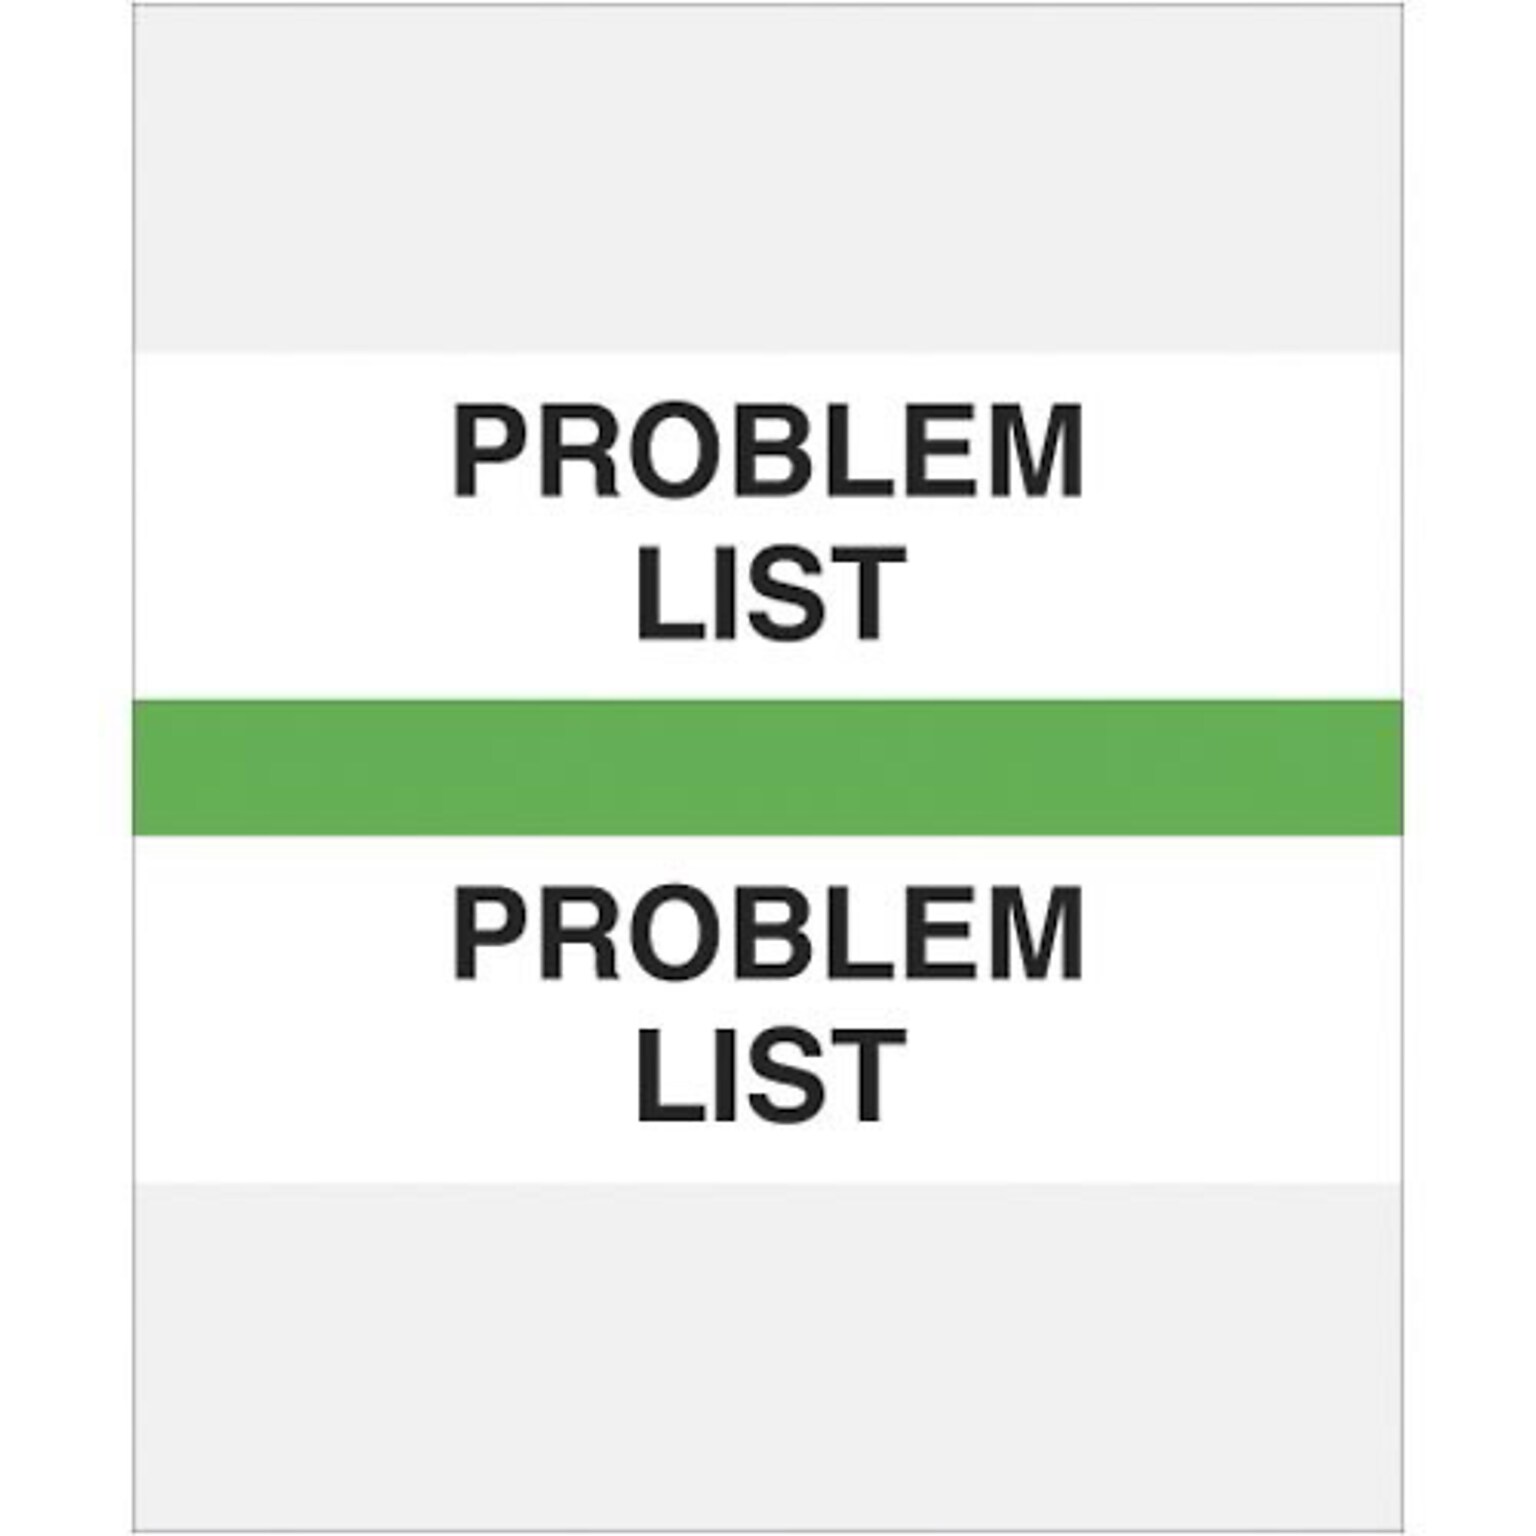 Medical Arts Press® Standard Preprinted Chart Divider Tabs; Problem List, Light Green